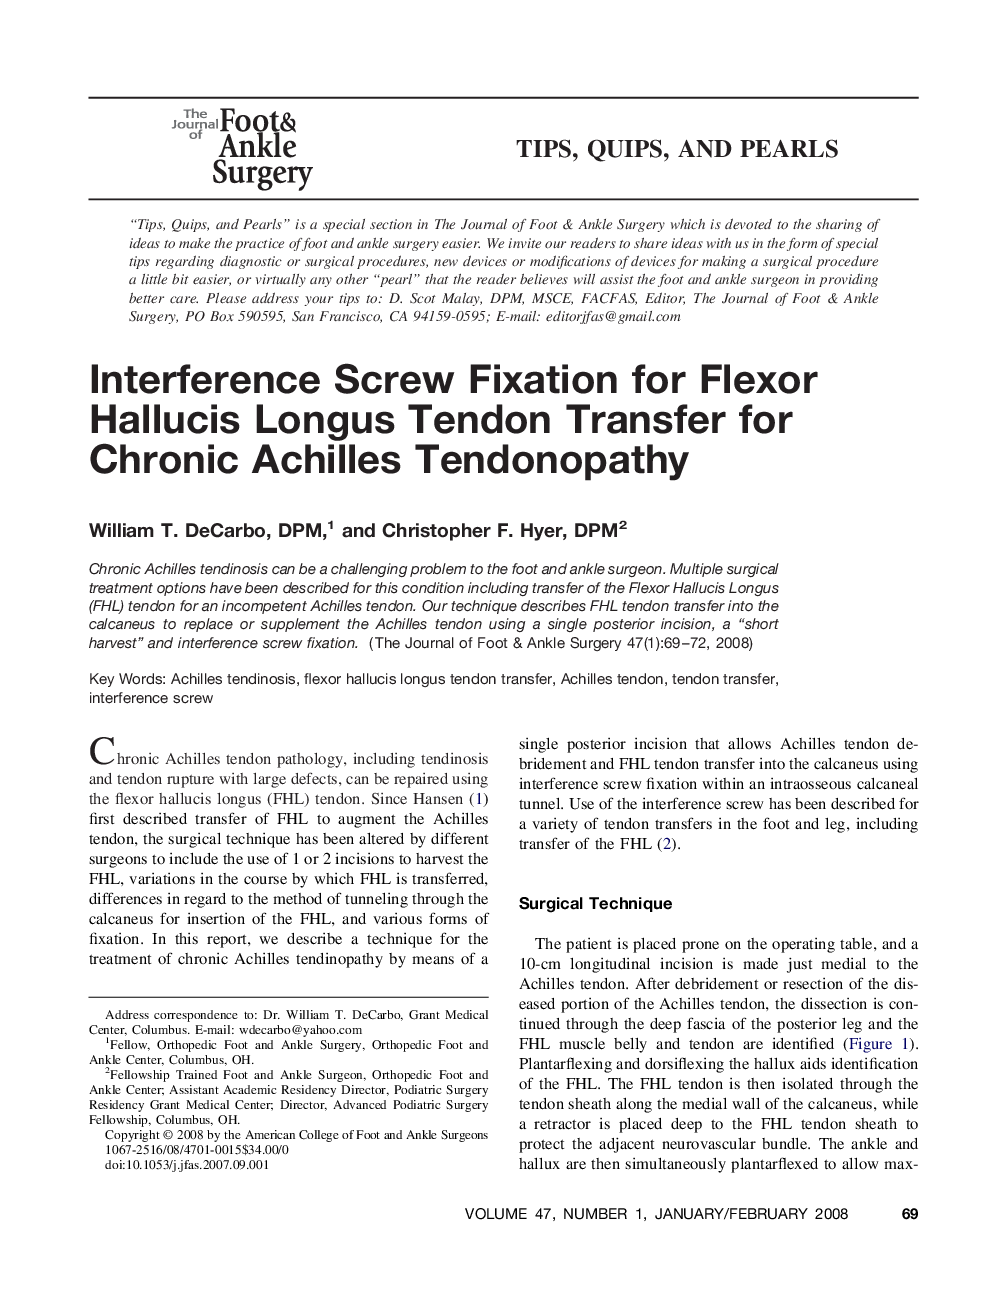 Interference Screw Fixation for Flexor Hallucis Longus Tendon Transfer for Chronic Achilles Tendonopathy